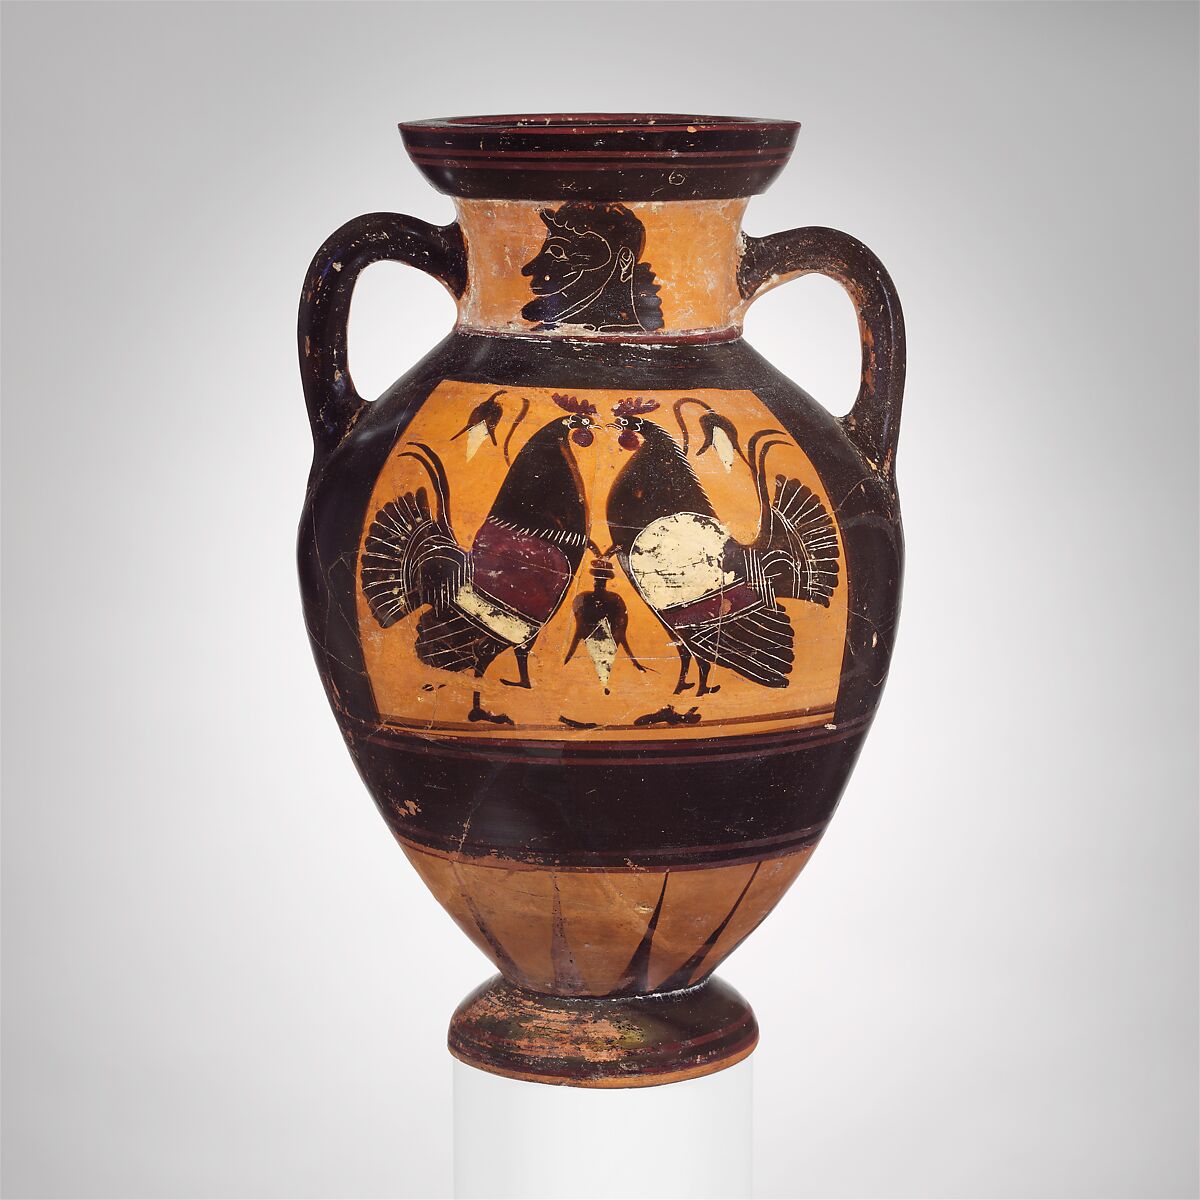 Terracotta neck-amphora (jar), Attributed to the Painter of London B 76, Terracotta, Greek, Attic 